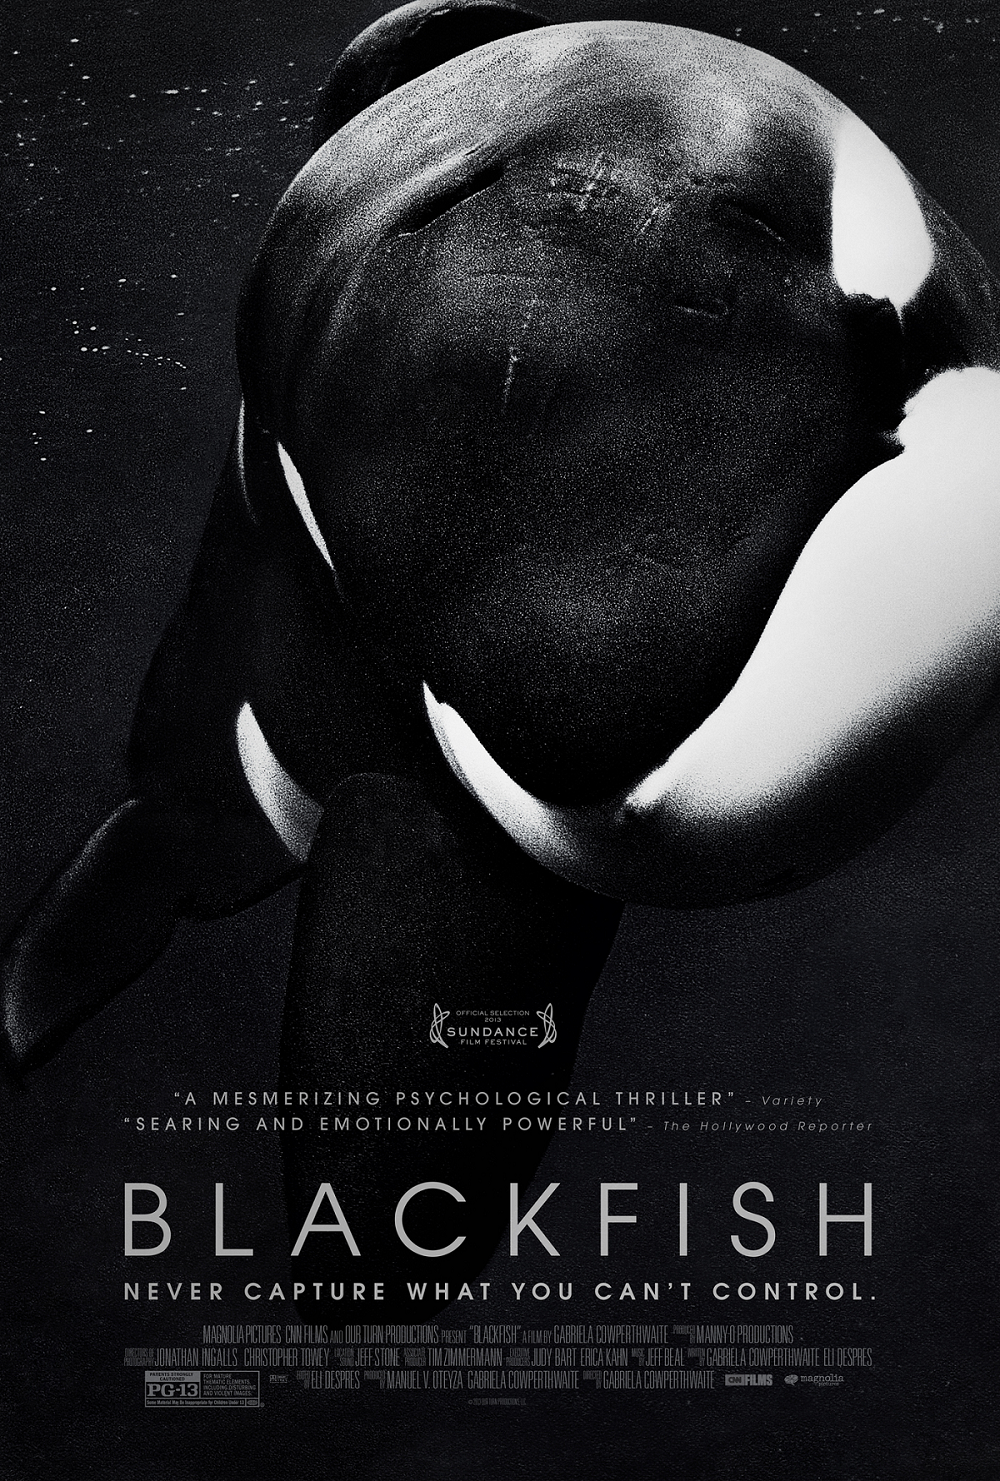 Blackfish documentary poster